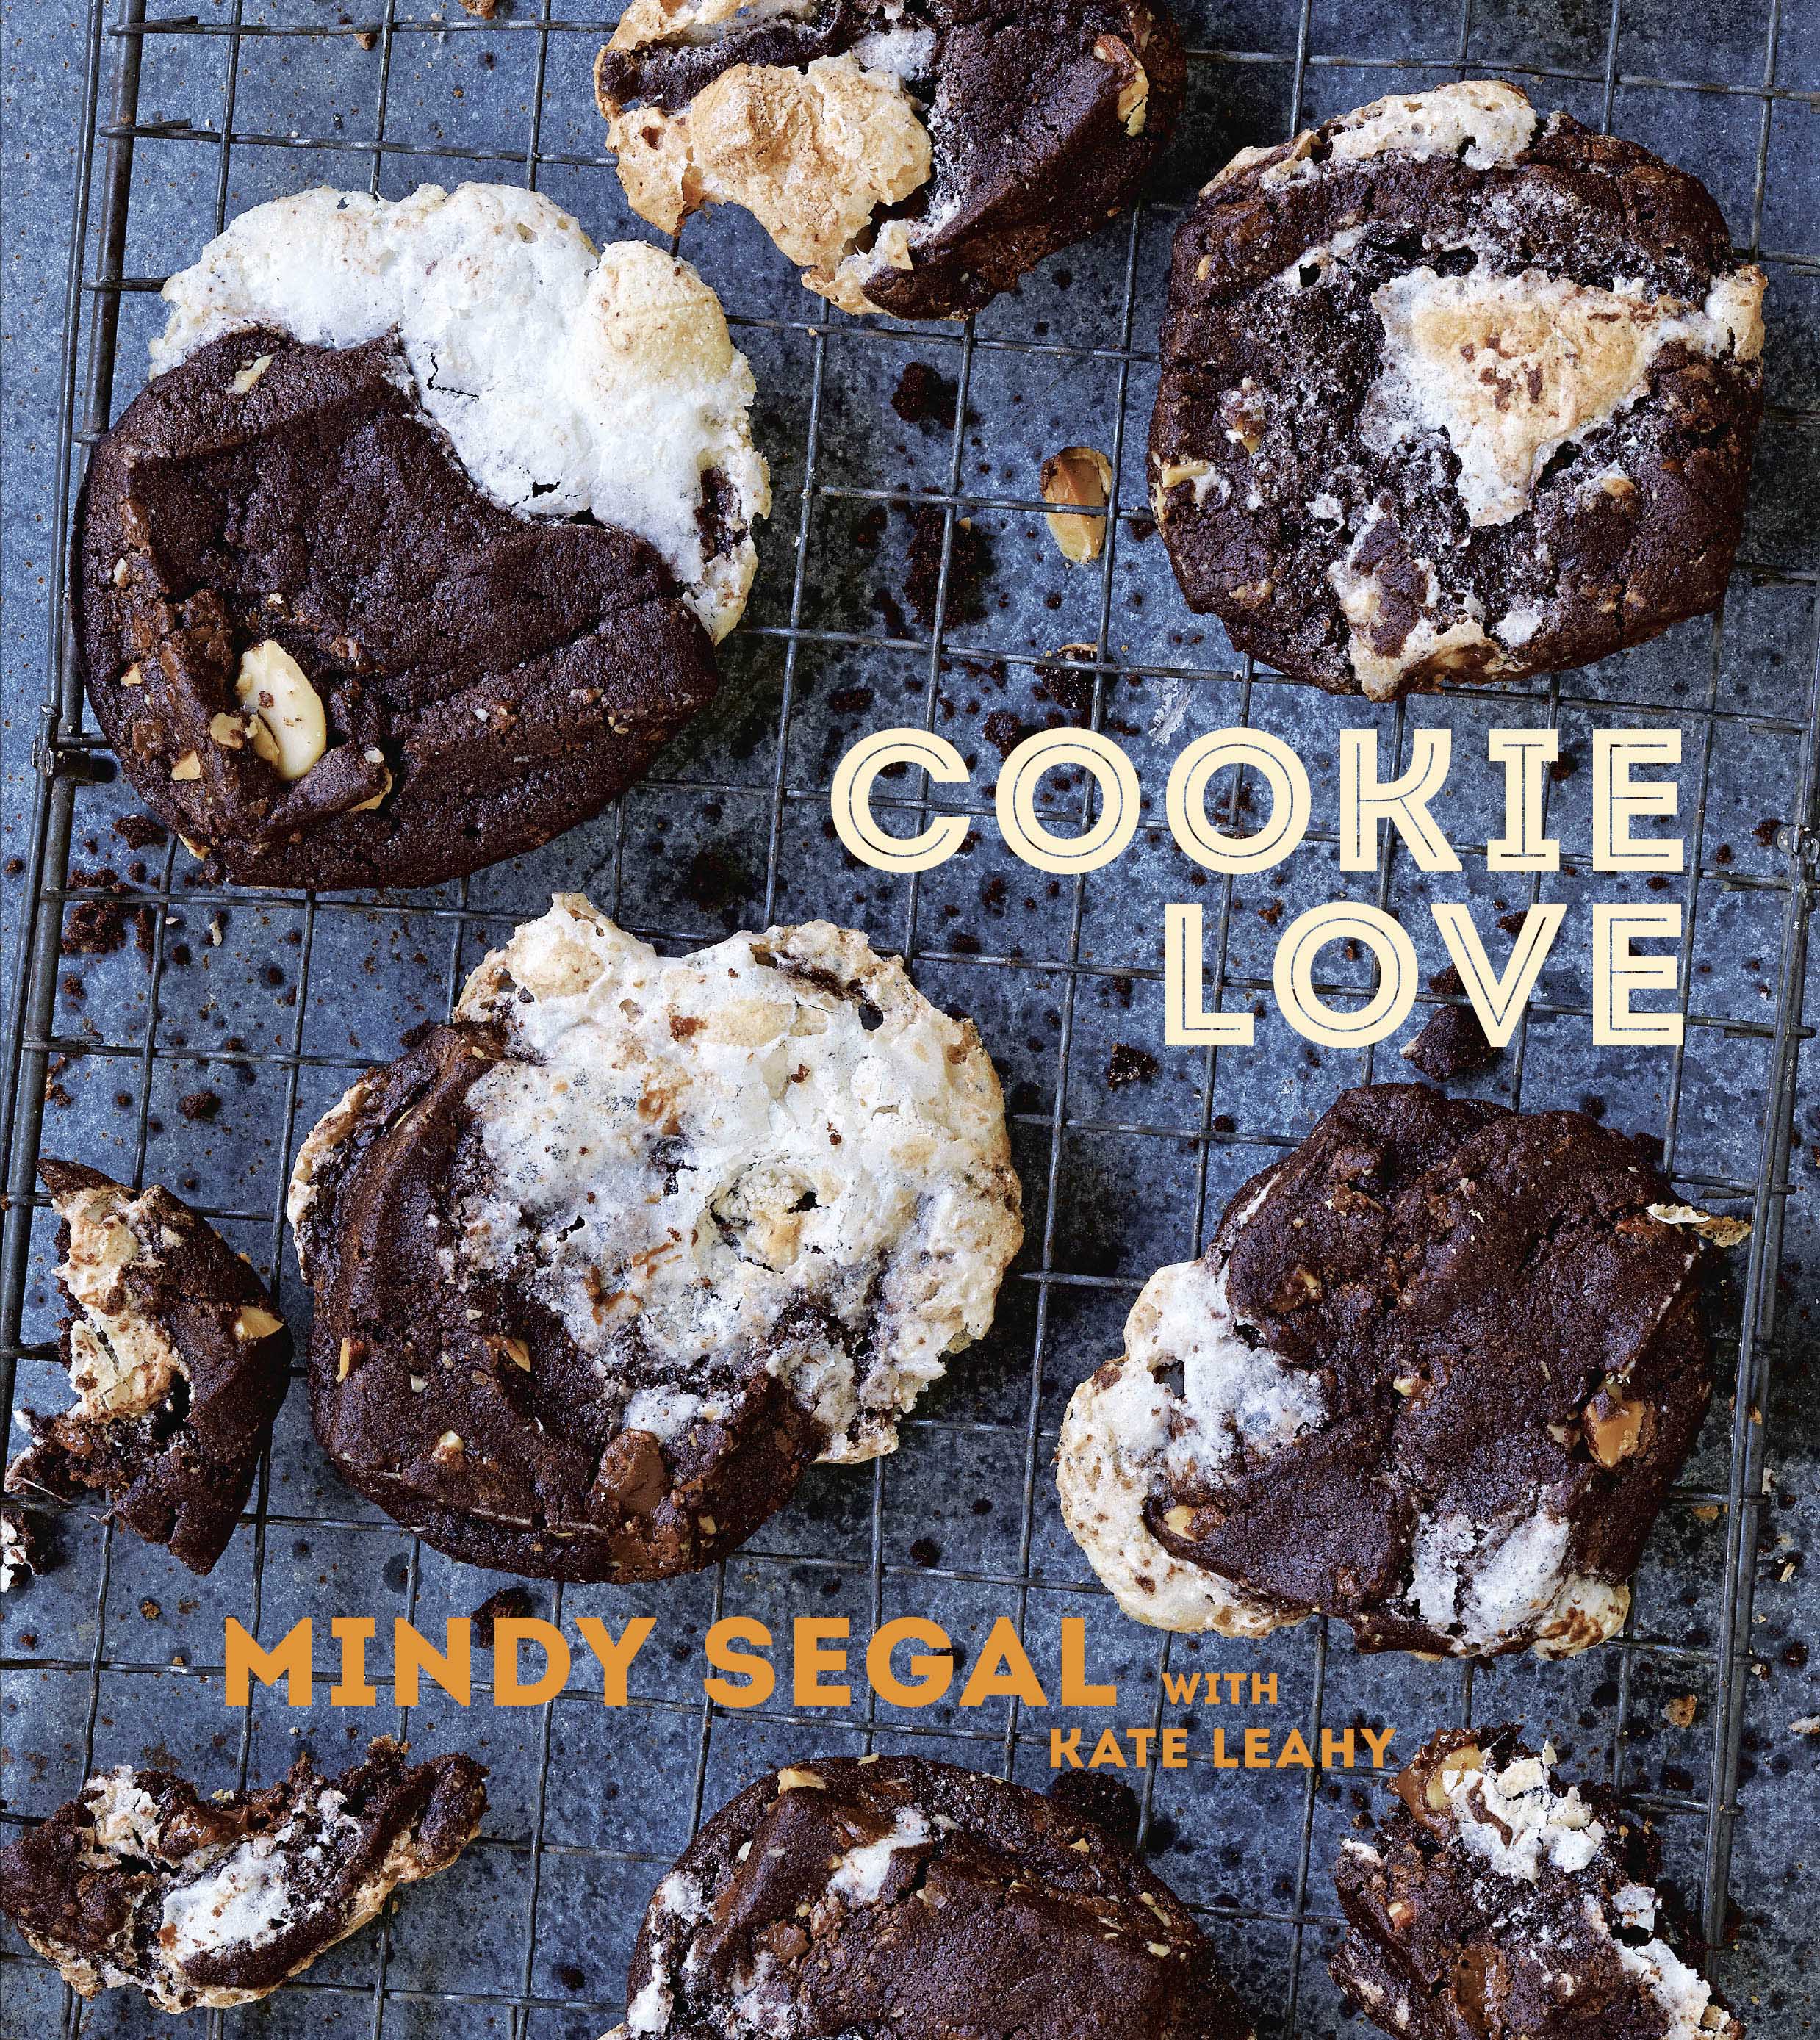 Mindy Segal's "Cookie Love" (Dan Goldberg © 2015)